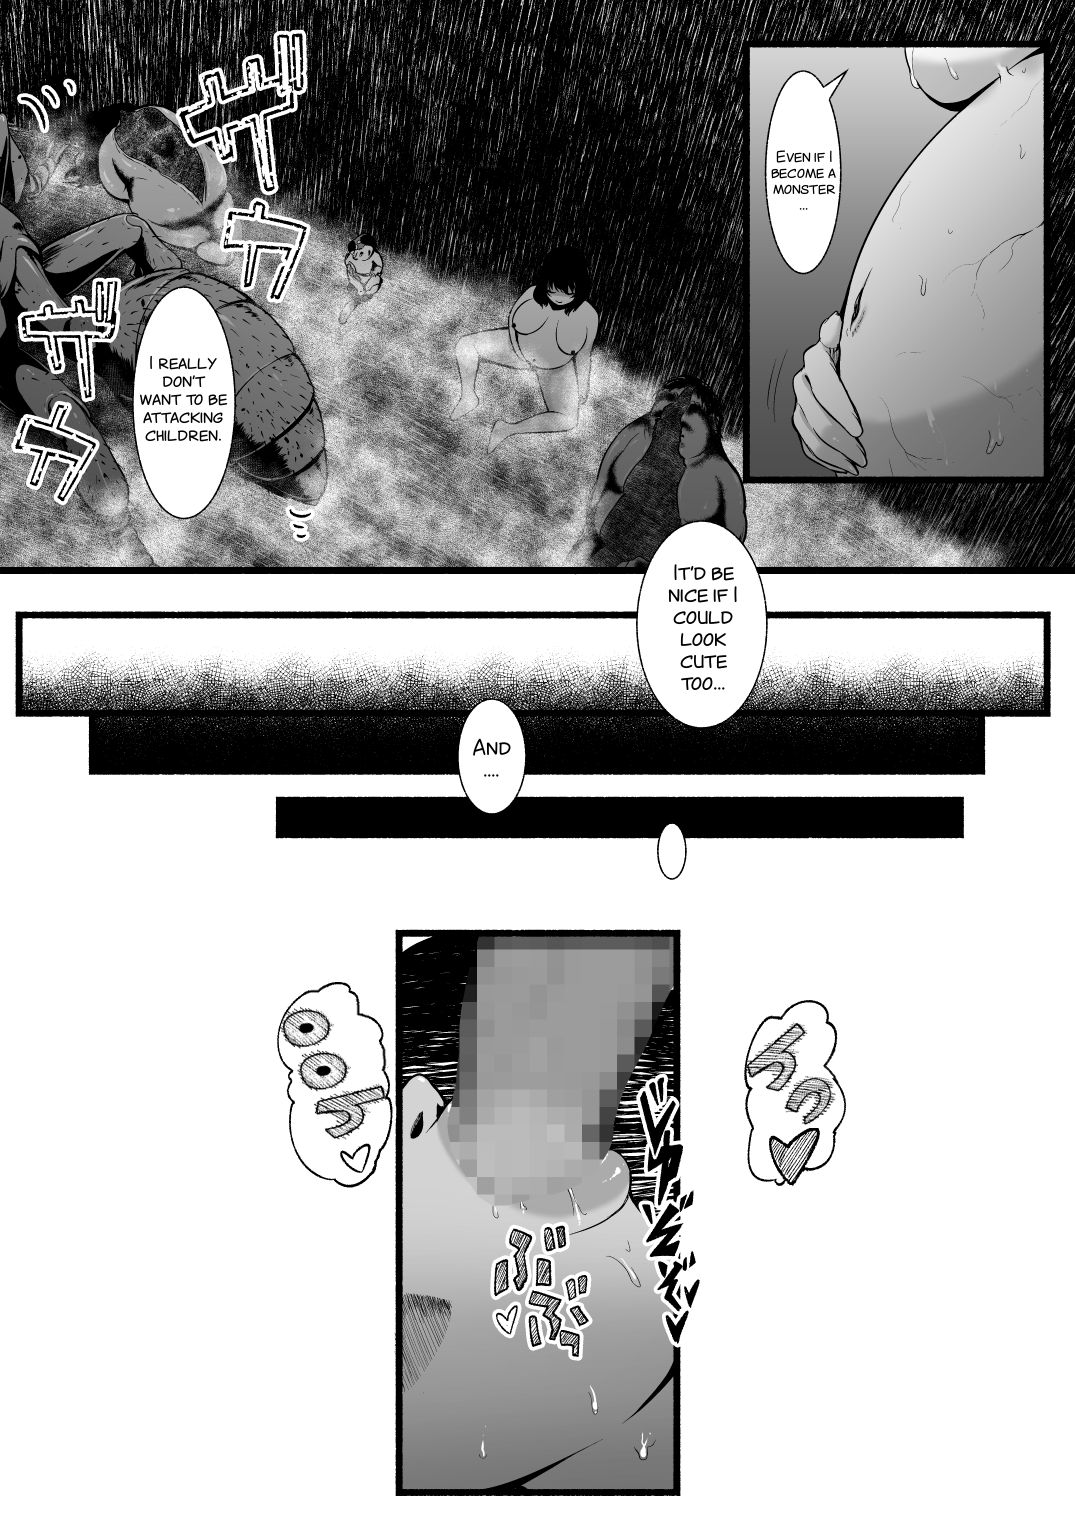 [Ryona's Station (YOSHITORA)] BRAIN EATER STAGE1 #5-6 [英訳]